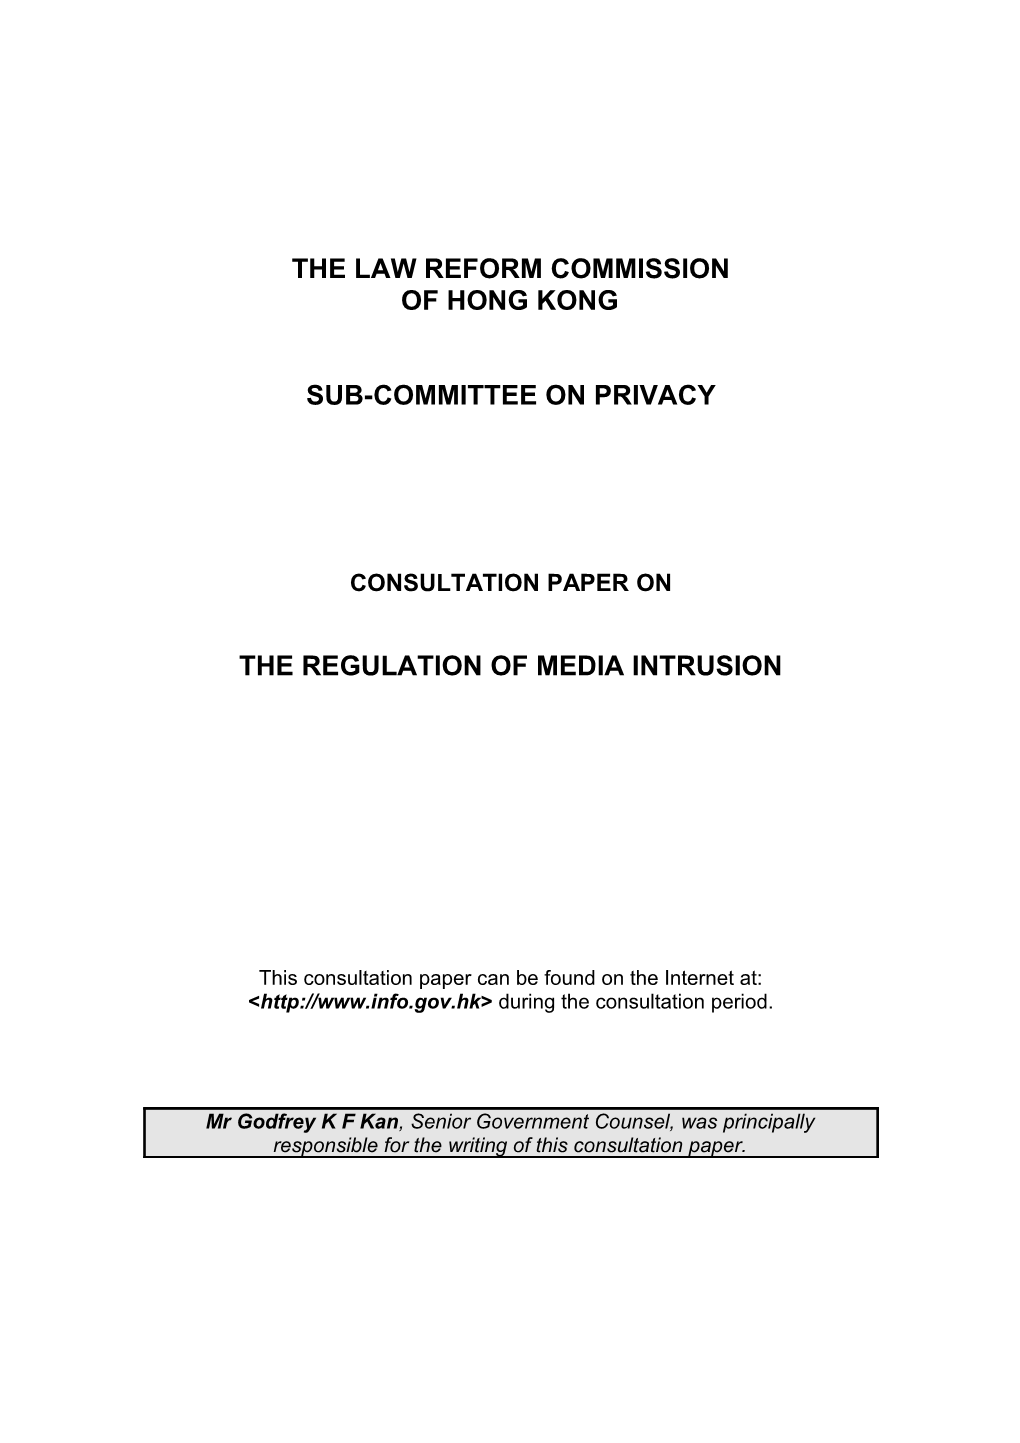 The Regulation of Media Intrusion (Ii)